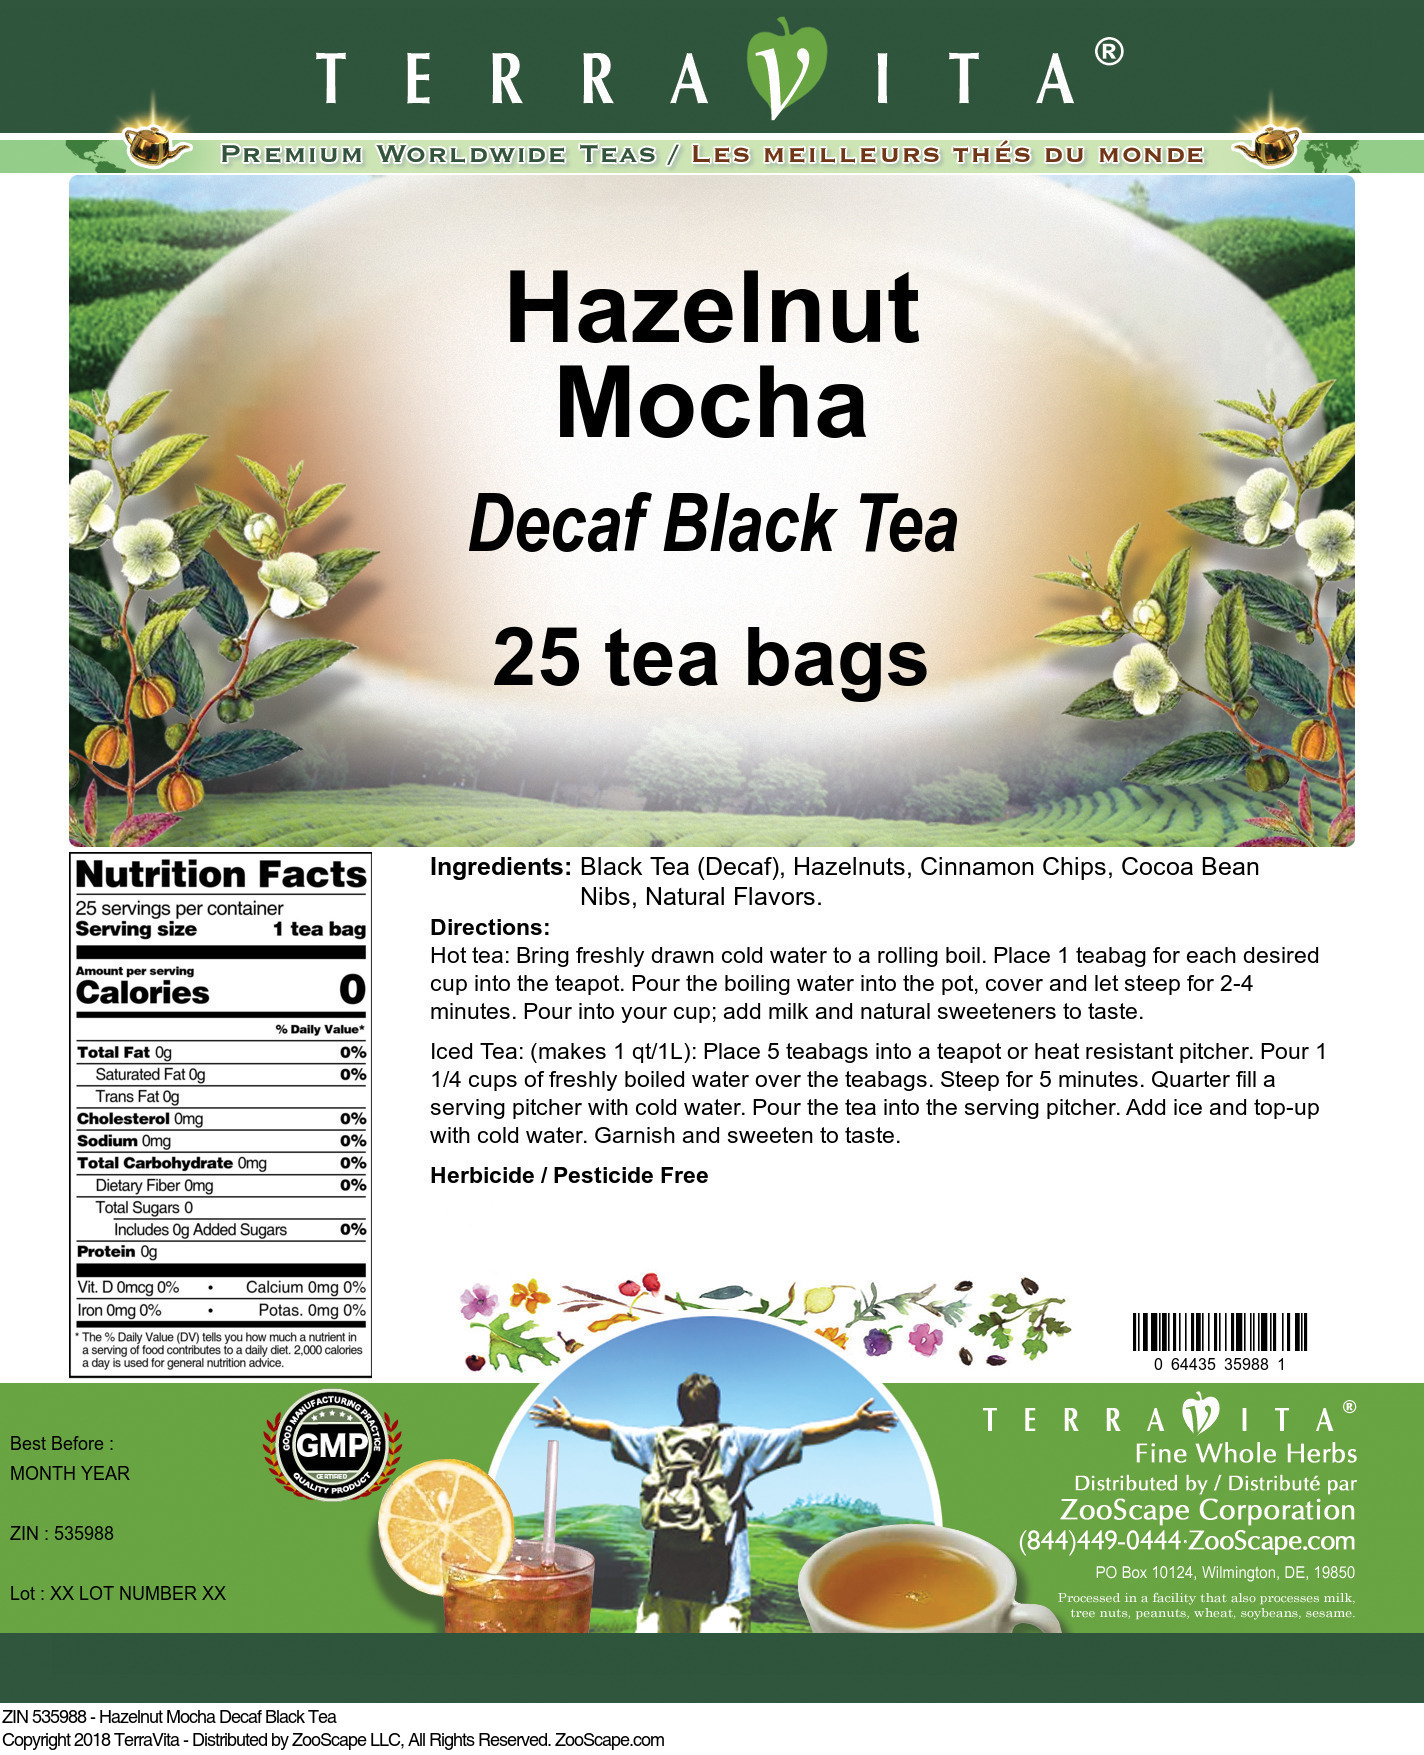 Hazelnut Mocha Decaf Black Tea - Label